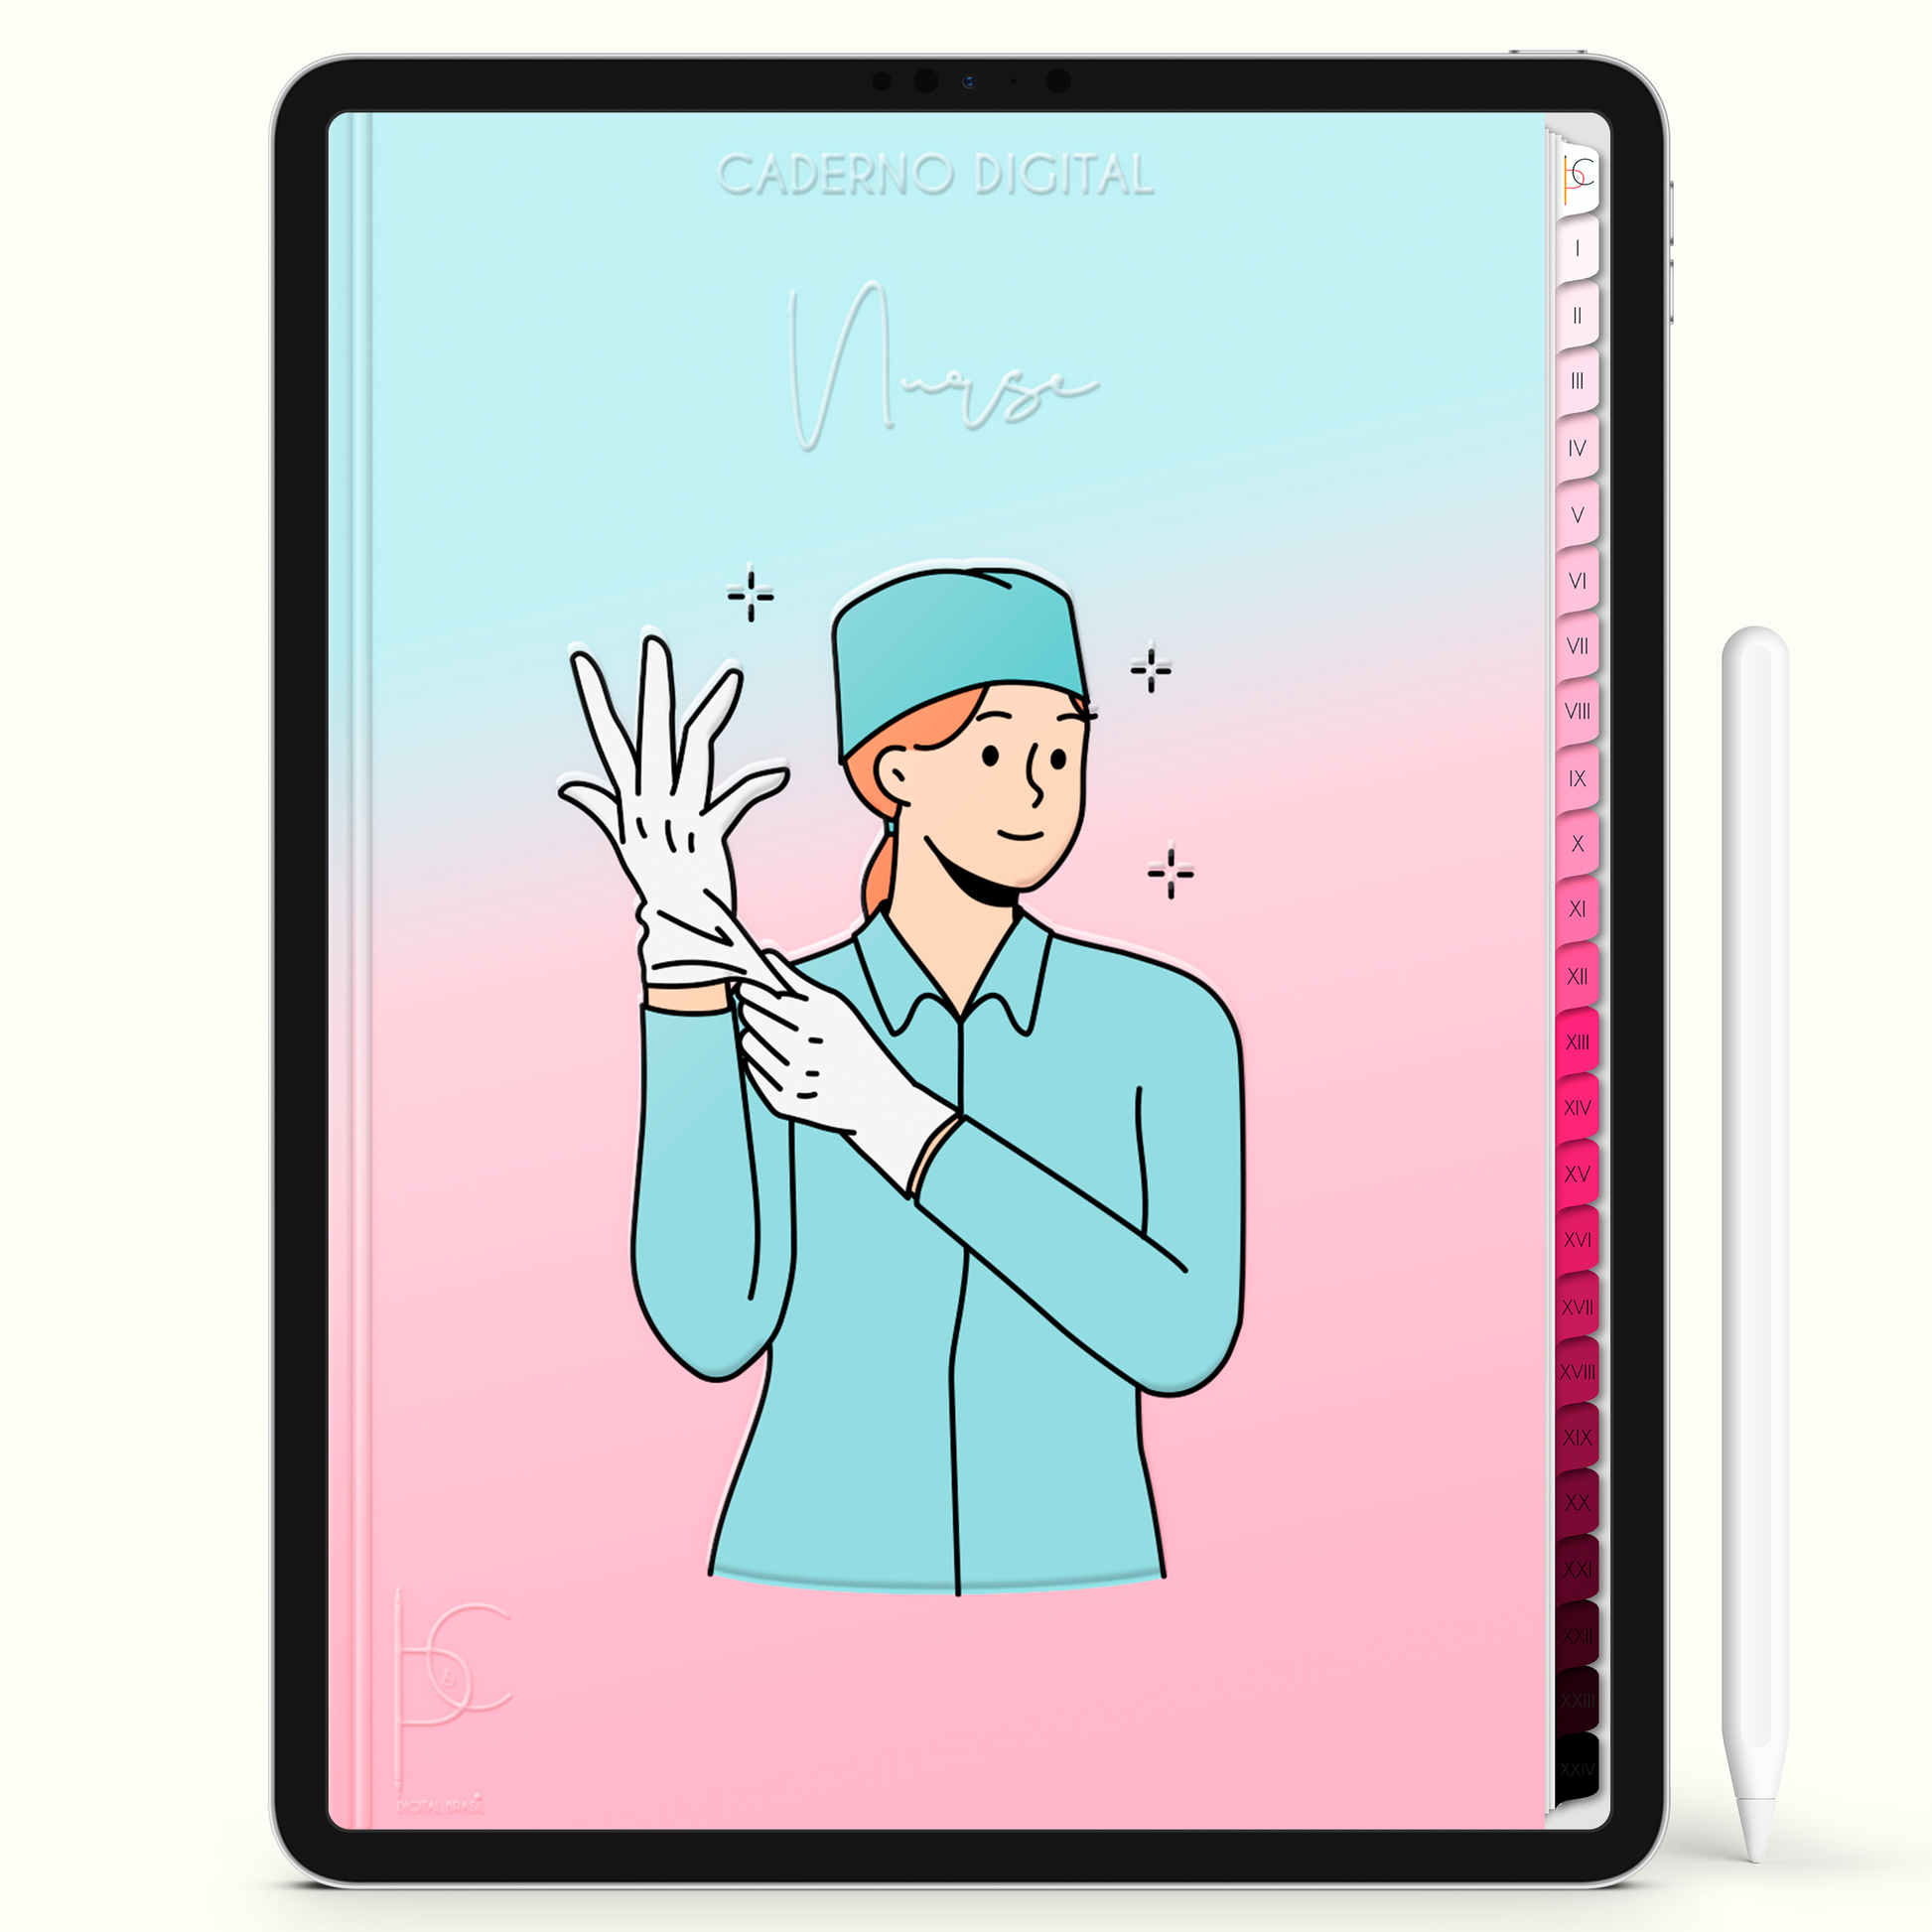 Caderno Digital Blush Enfermeira Nurse Medicine 24 Matérias • iPad e Tablet Android • Download instantâneo • Sustentável